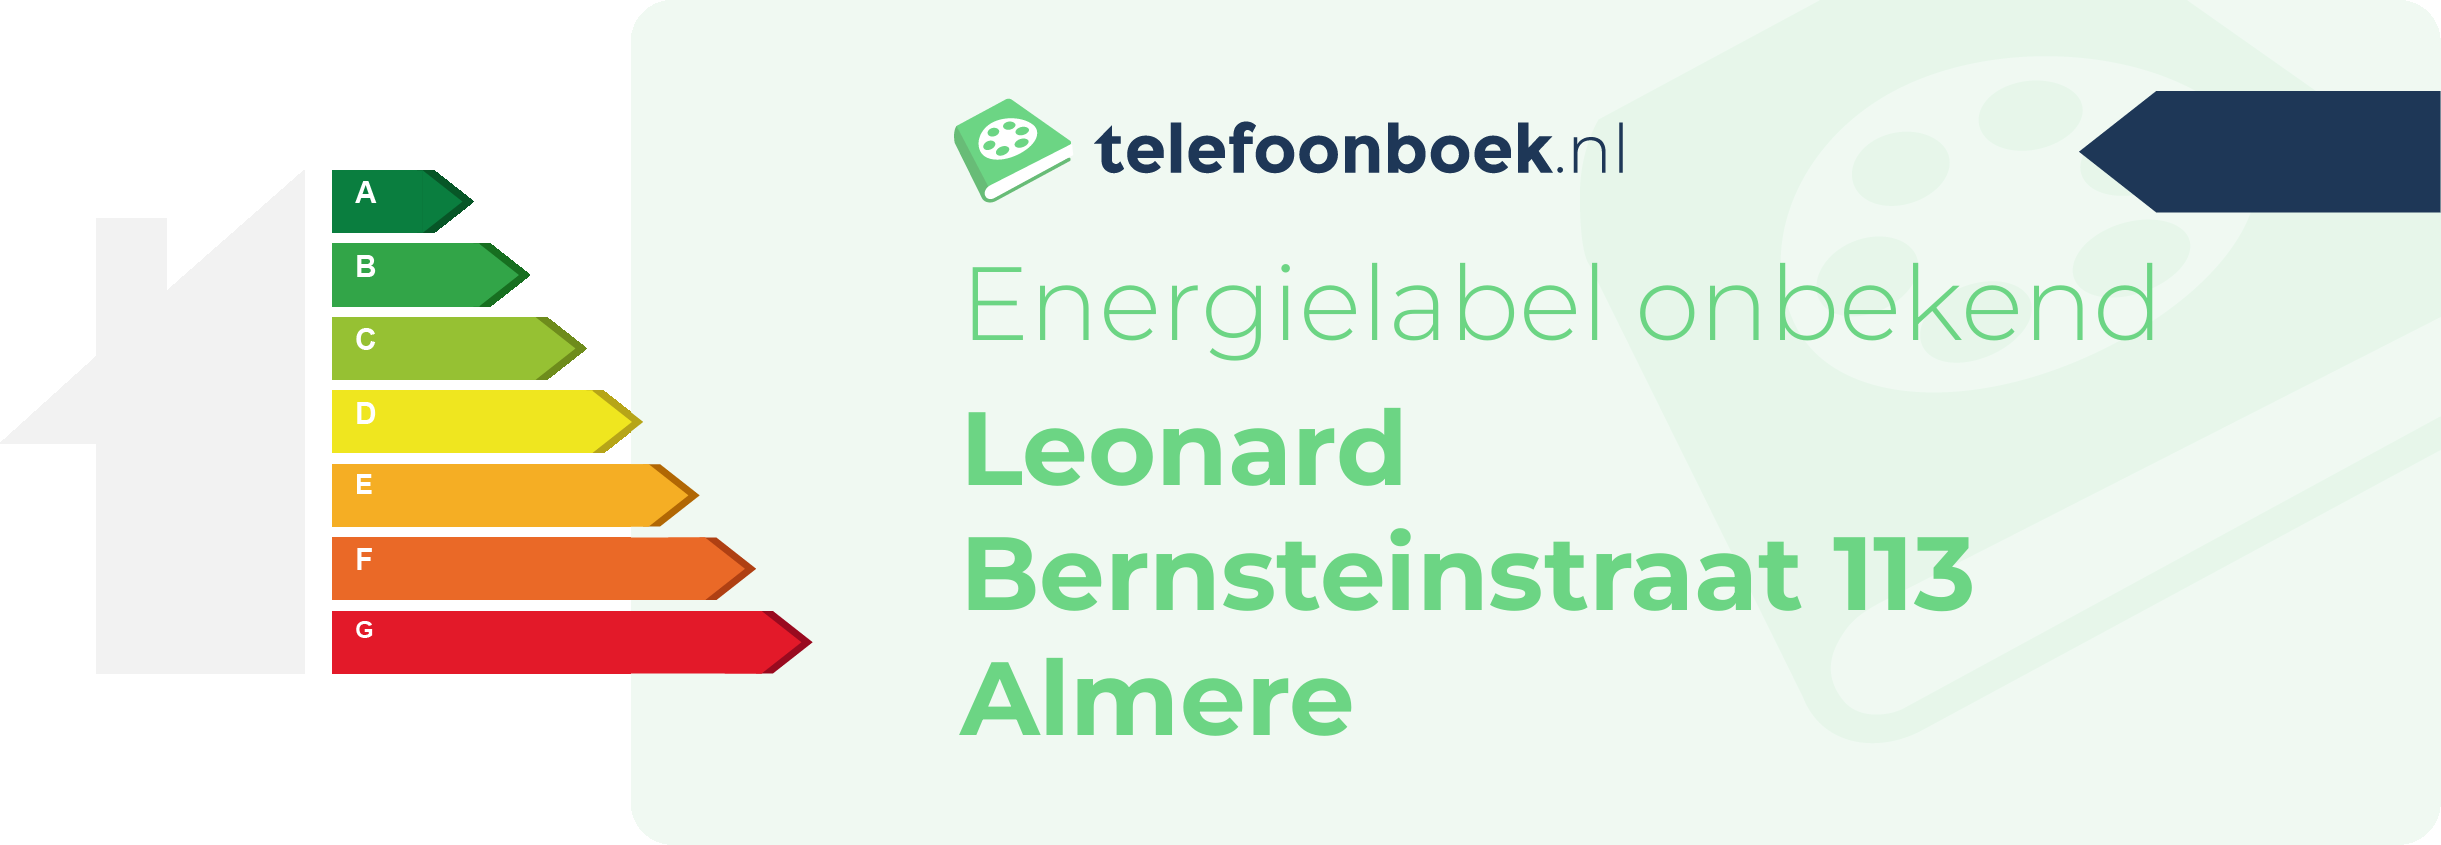 Energielabel Leonard Bernsteinstraat 113 Almere